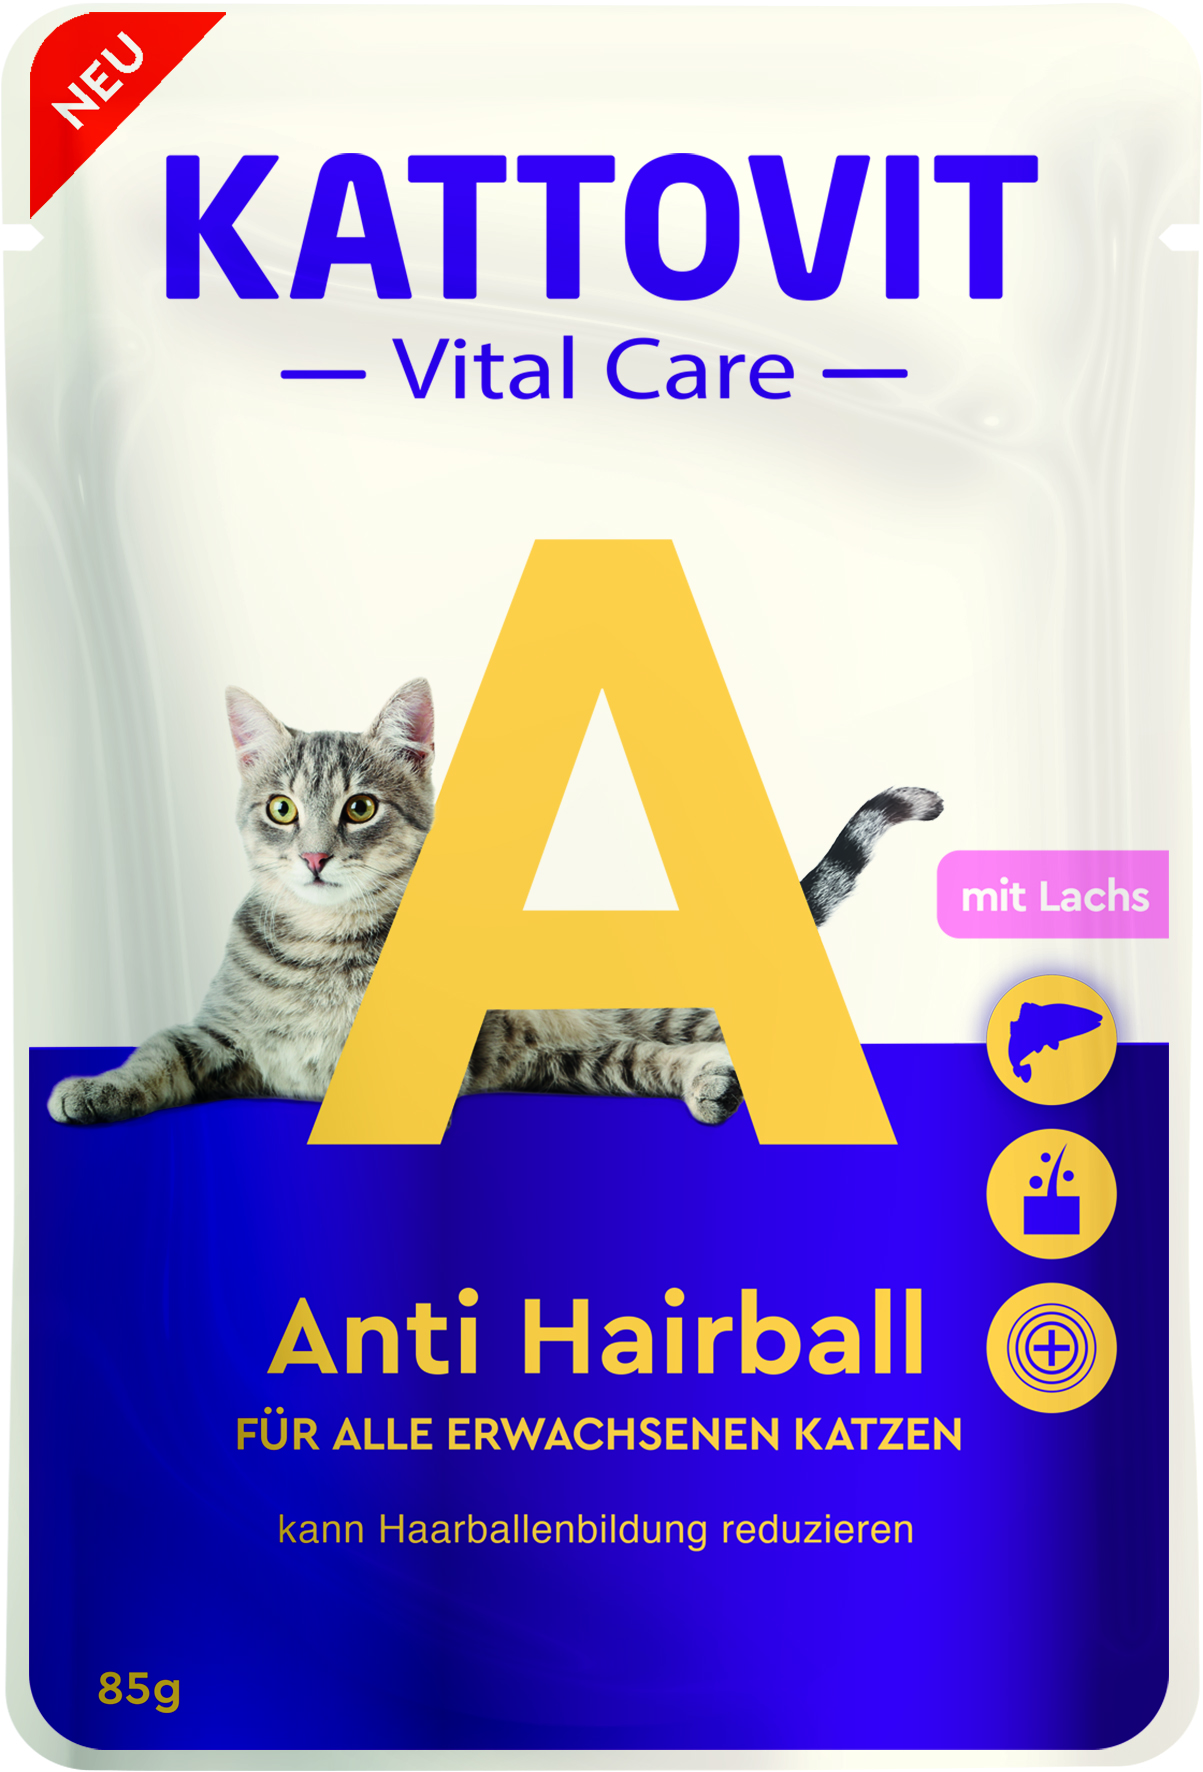 KATTOVIT Pouchbeutel Vital Care Anti Hairball 85g